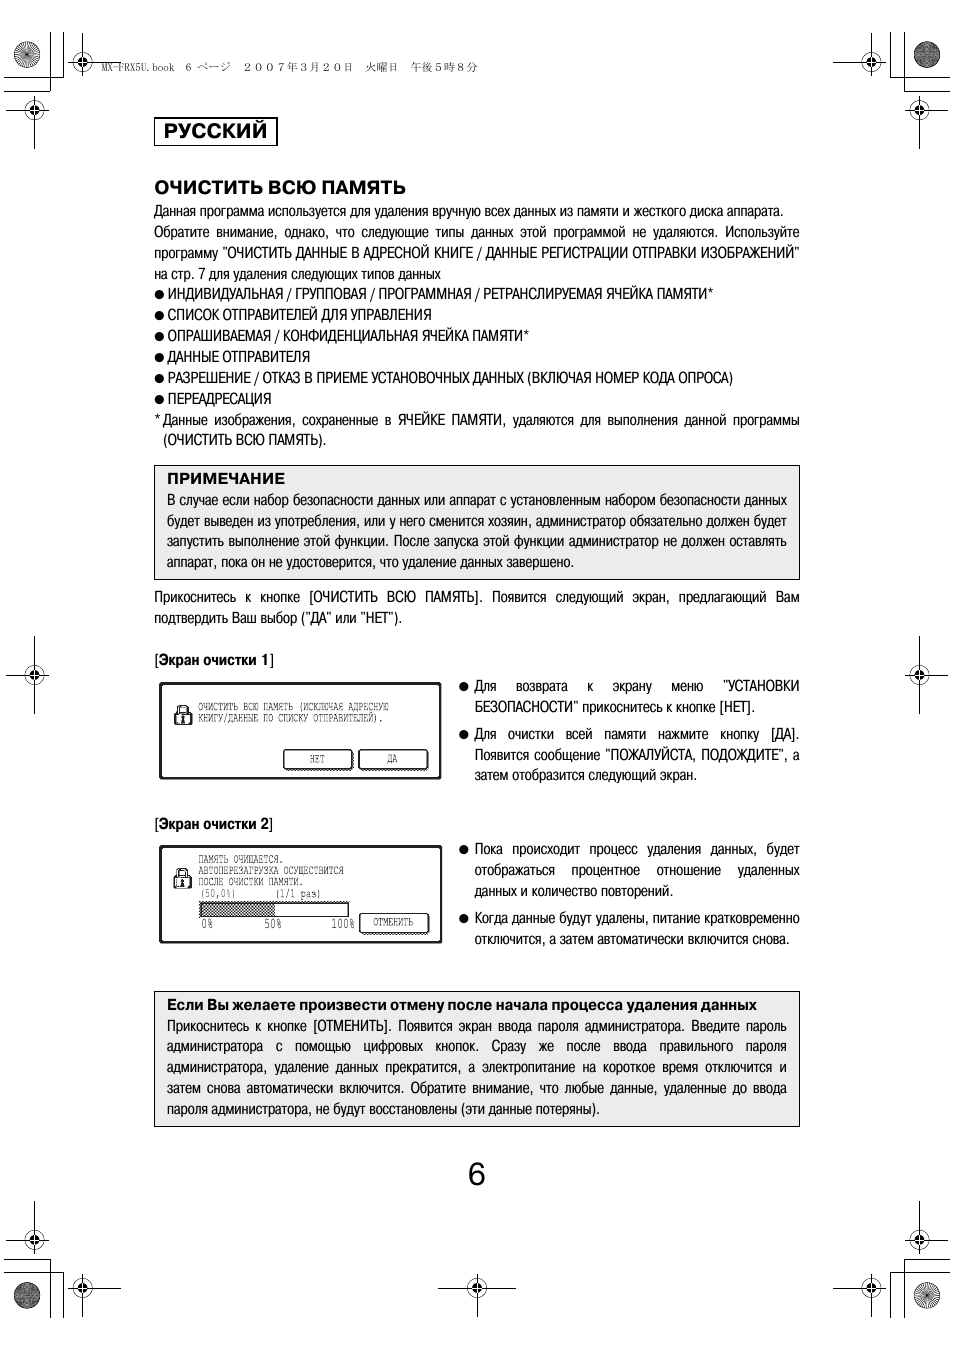 Русский, Очистить всю память | Sharp Funkcja identyfikacji użytkownika User Manual | Page 176 / 184